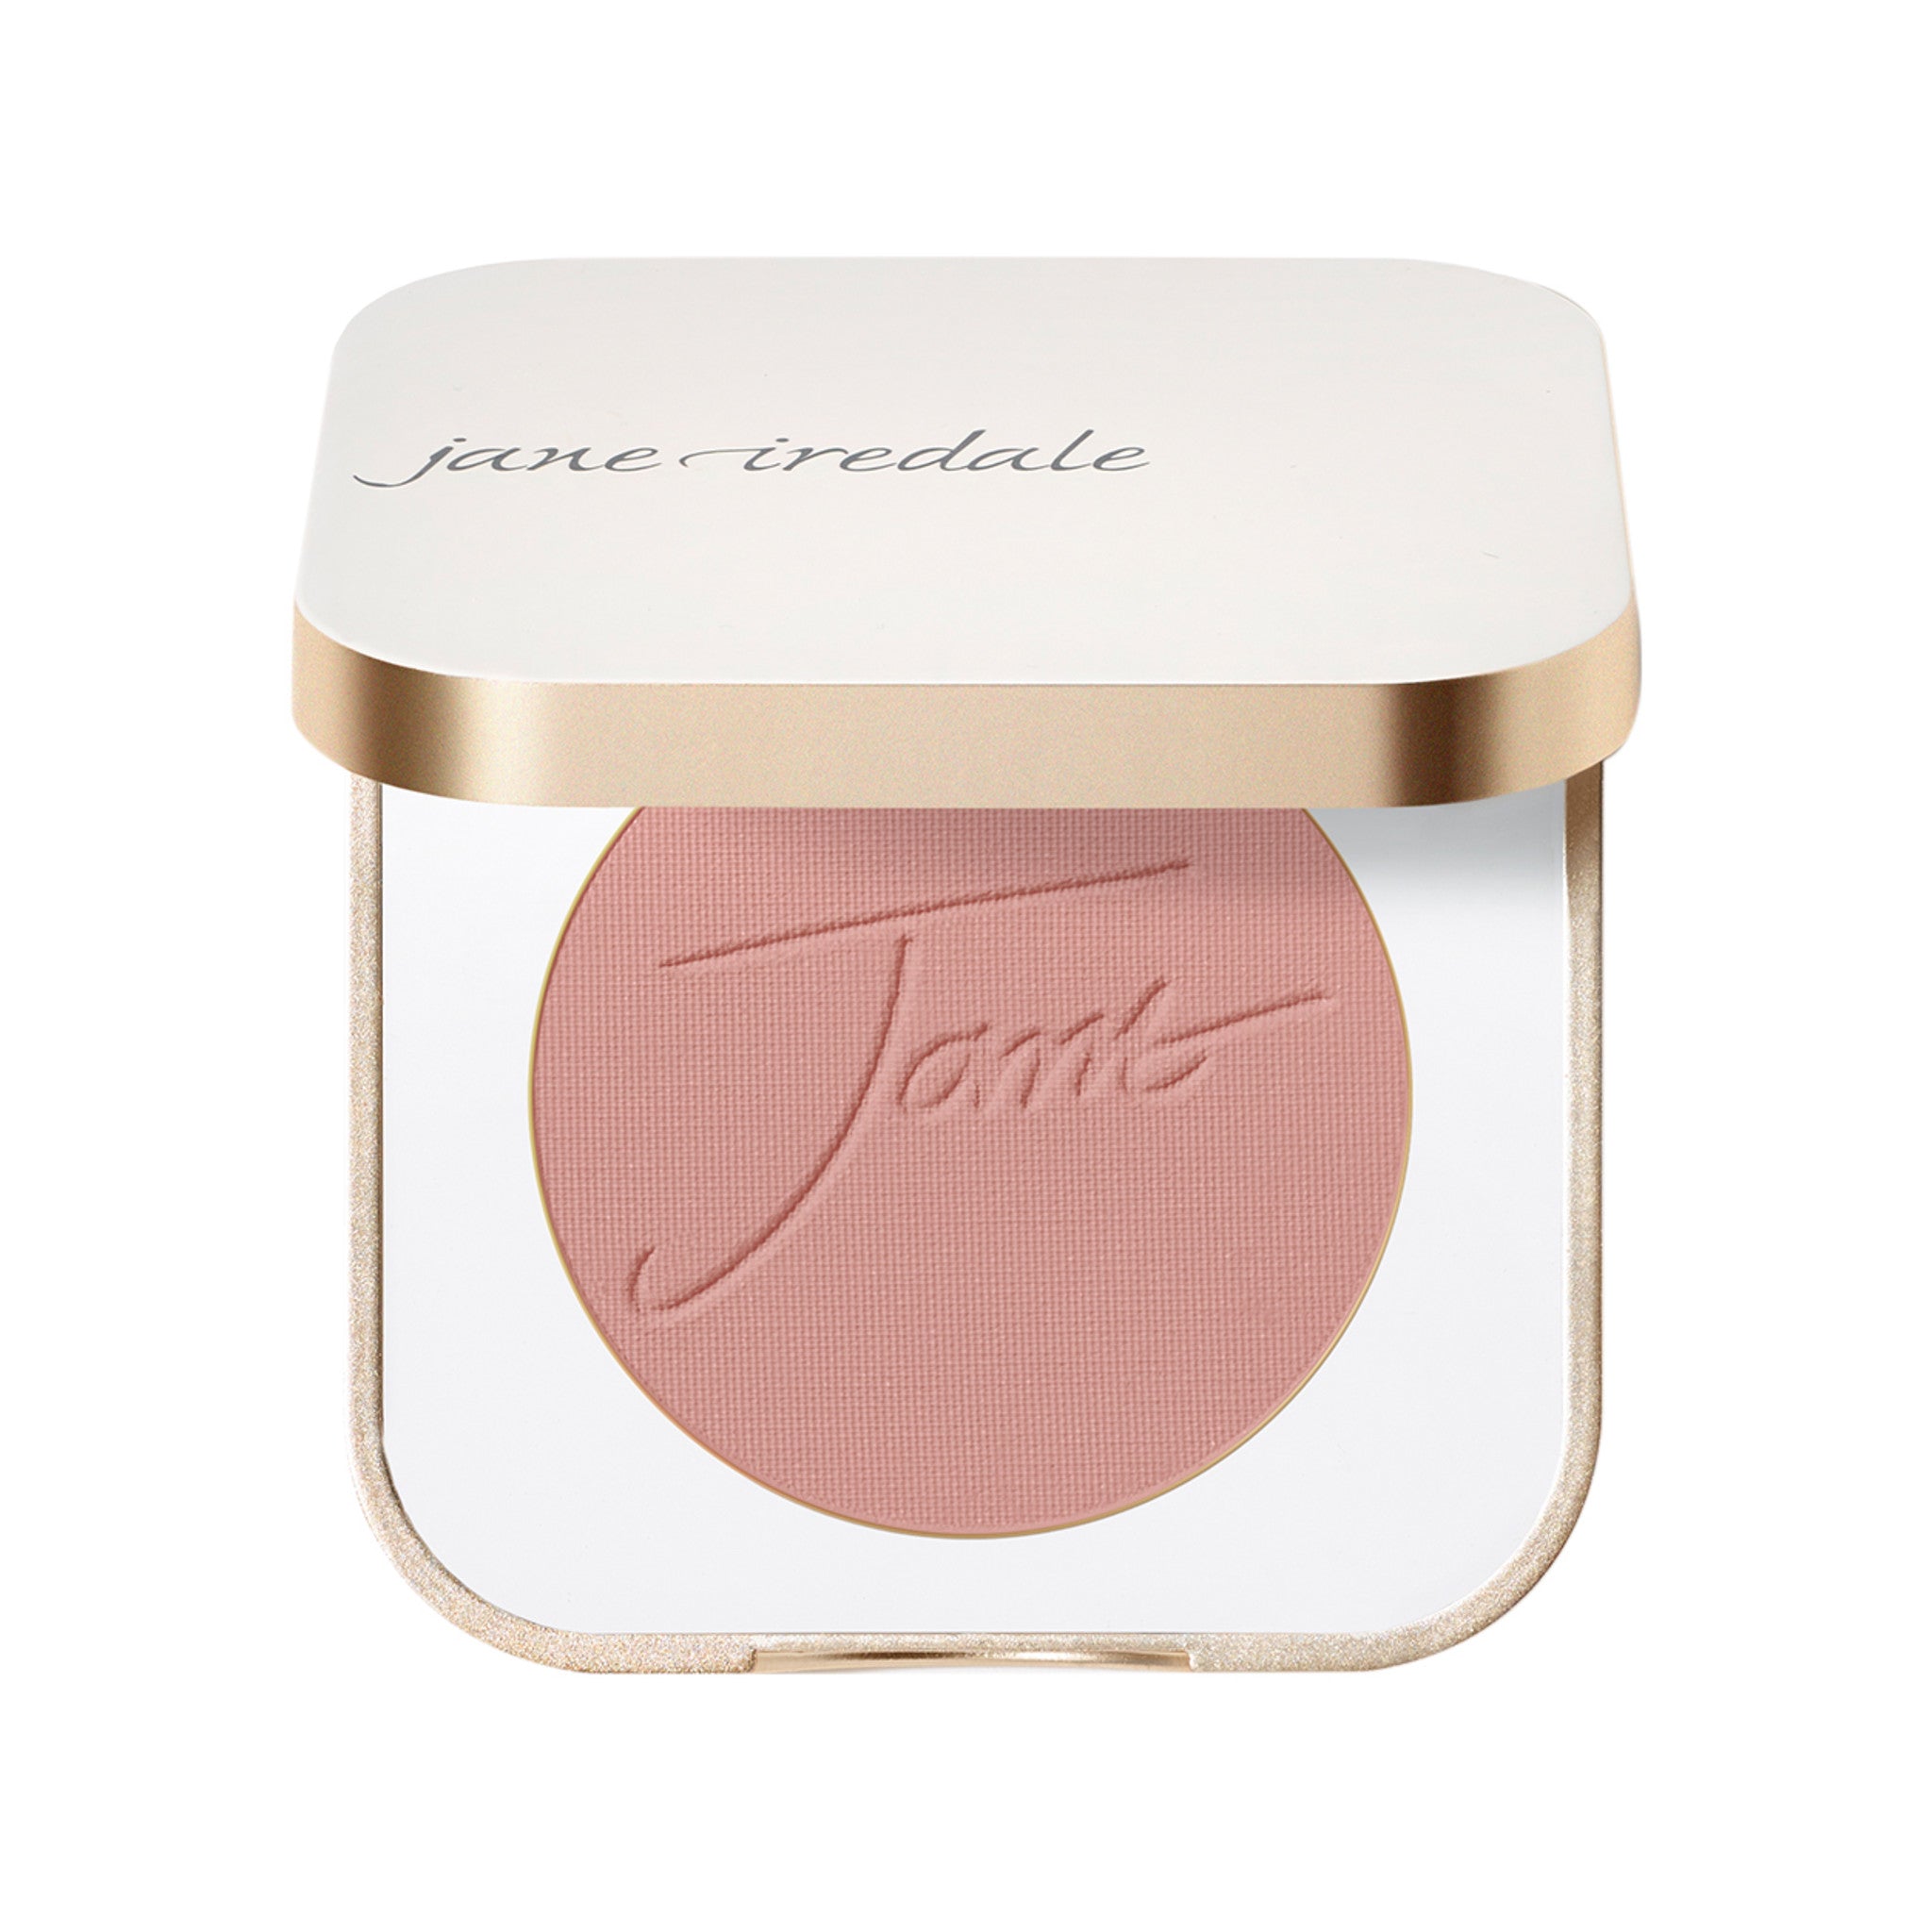 Jane Iredale PurePressed Blush Color/Shade variant: BARELY ROSE main image.